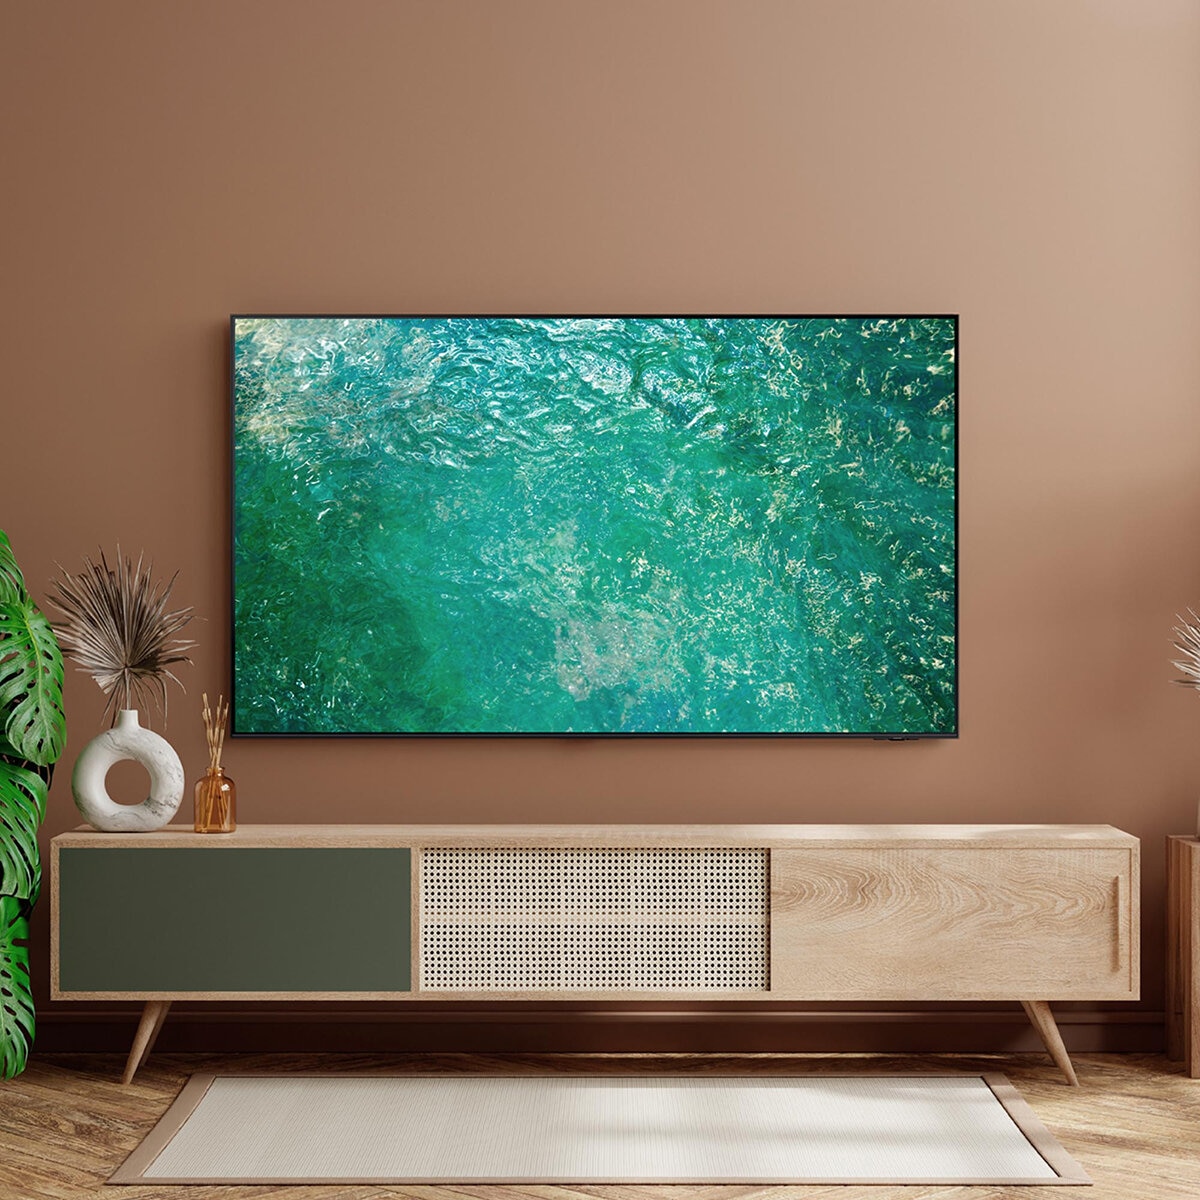 Samsung Pantalla 55" NEO QLED 4K UHD Smart TV